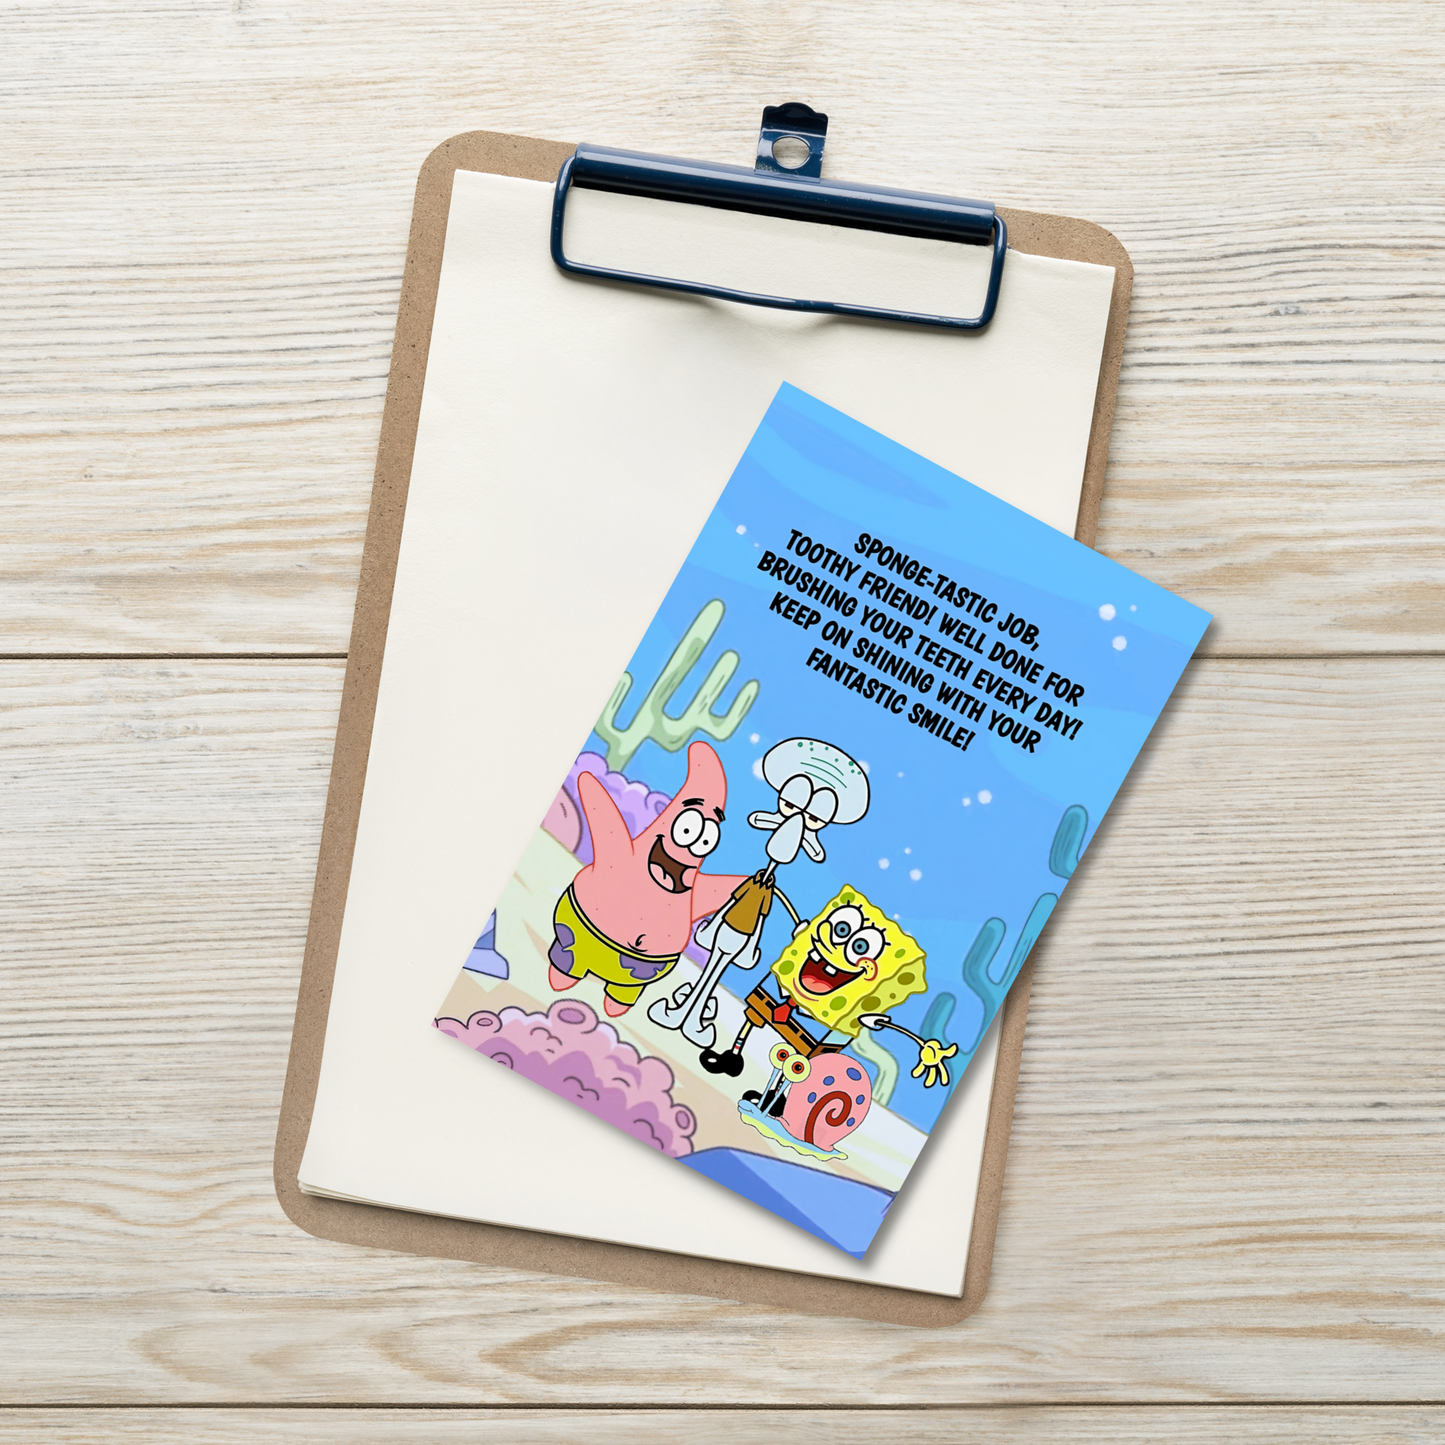 SpongeBob SquarePants | Dental Motivational & Reward Cards- Sponge-Tastic Job, Toothy Friend!